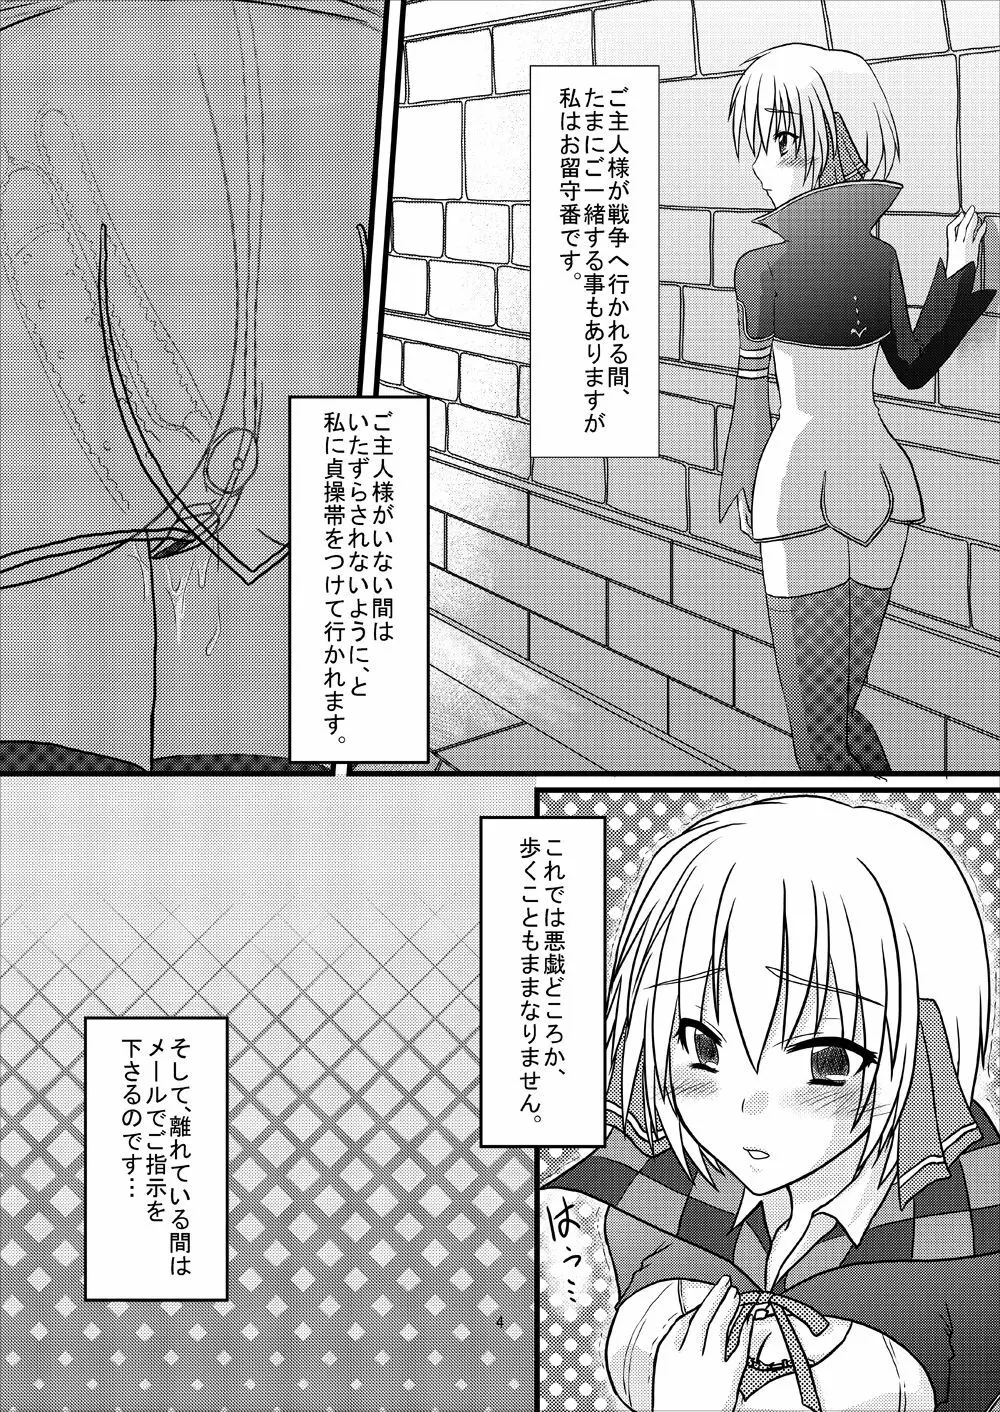 FEZ本まとめ - page4